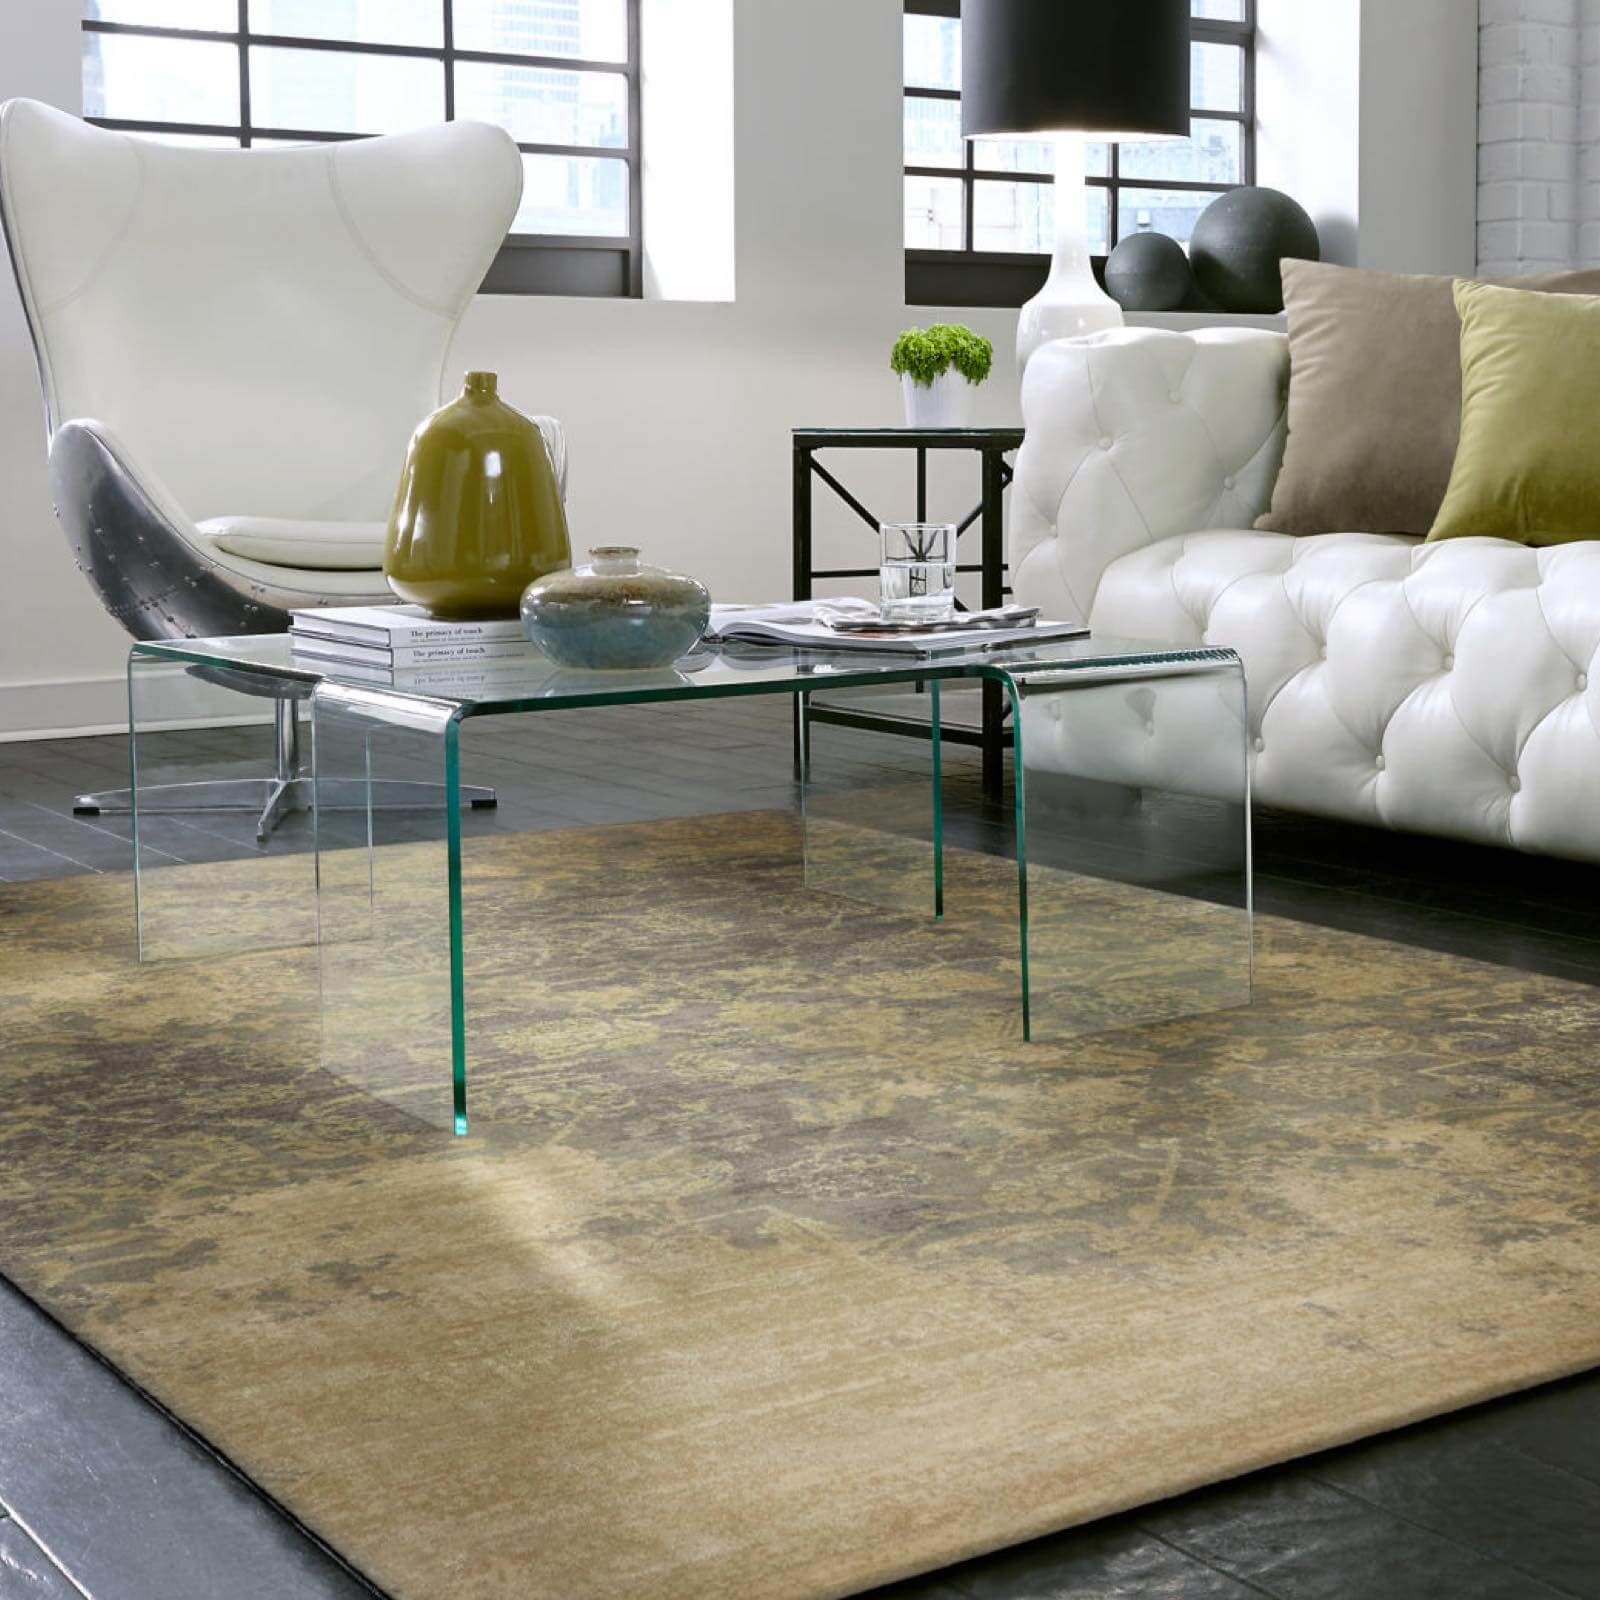 Living room rug | Redd Flooring & Design Center